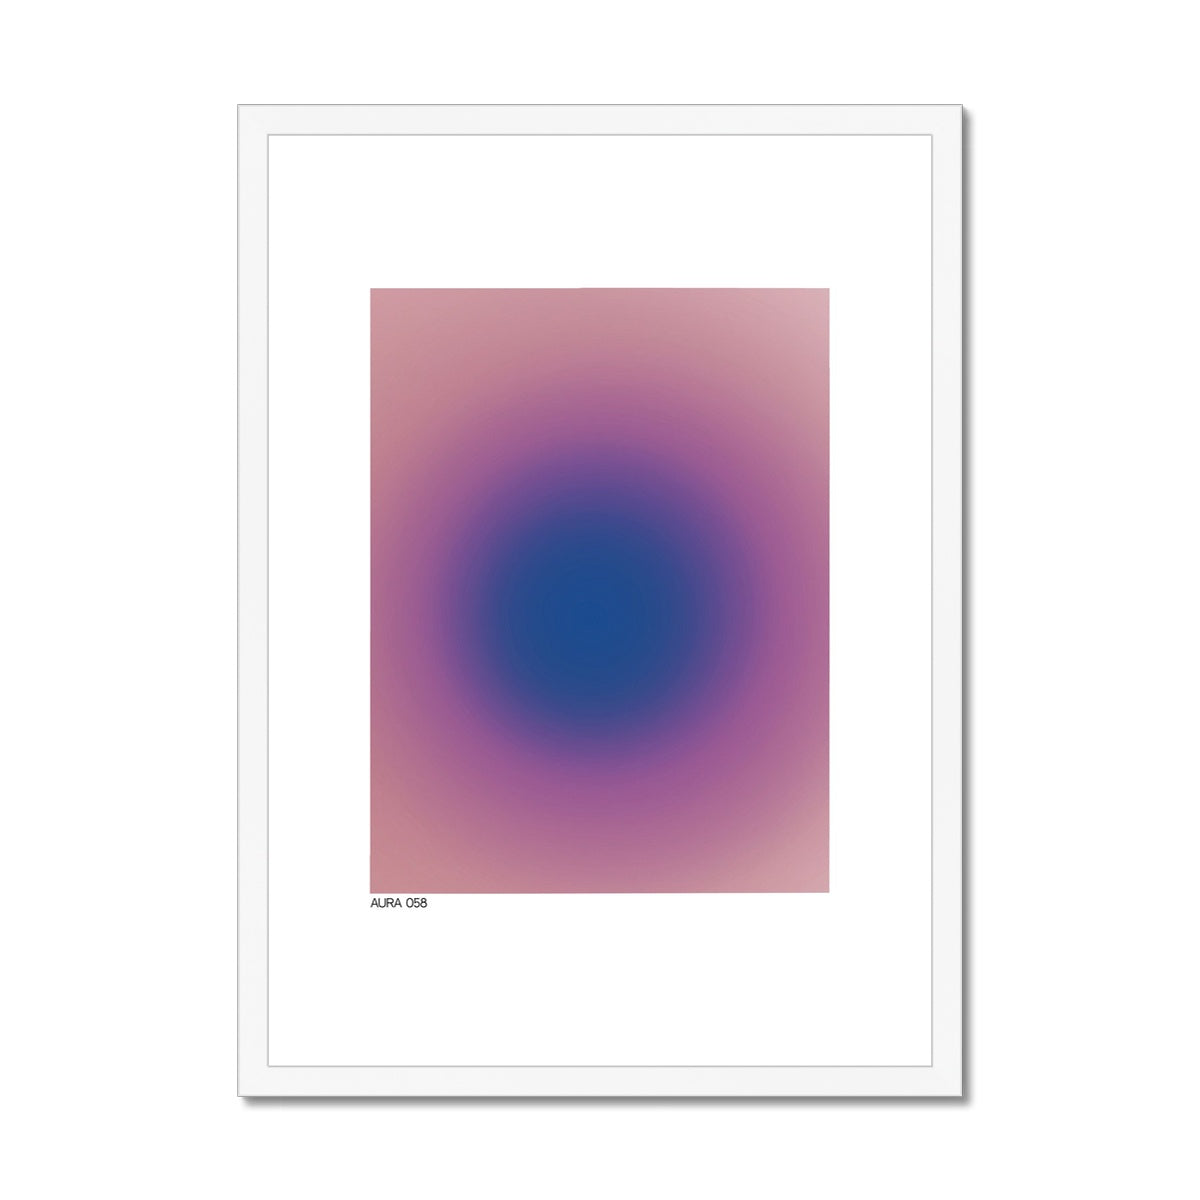 aura 058 Framed & Mounted Print